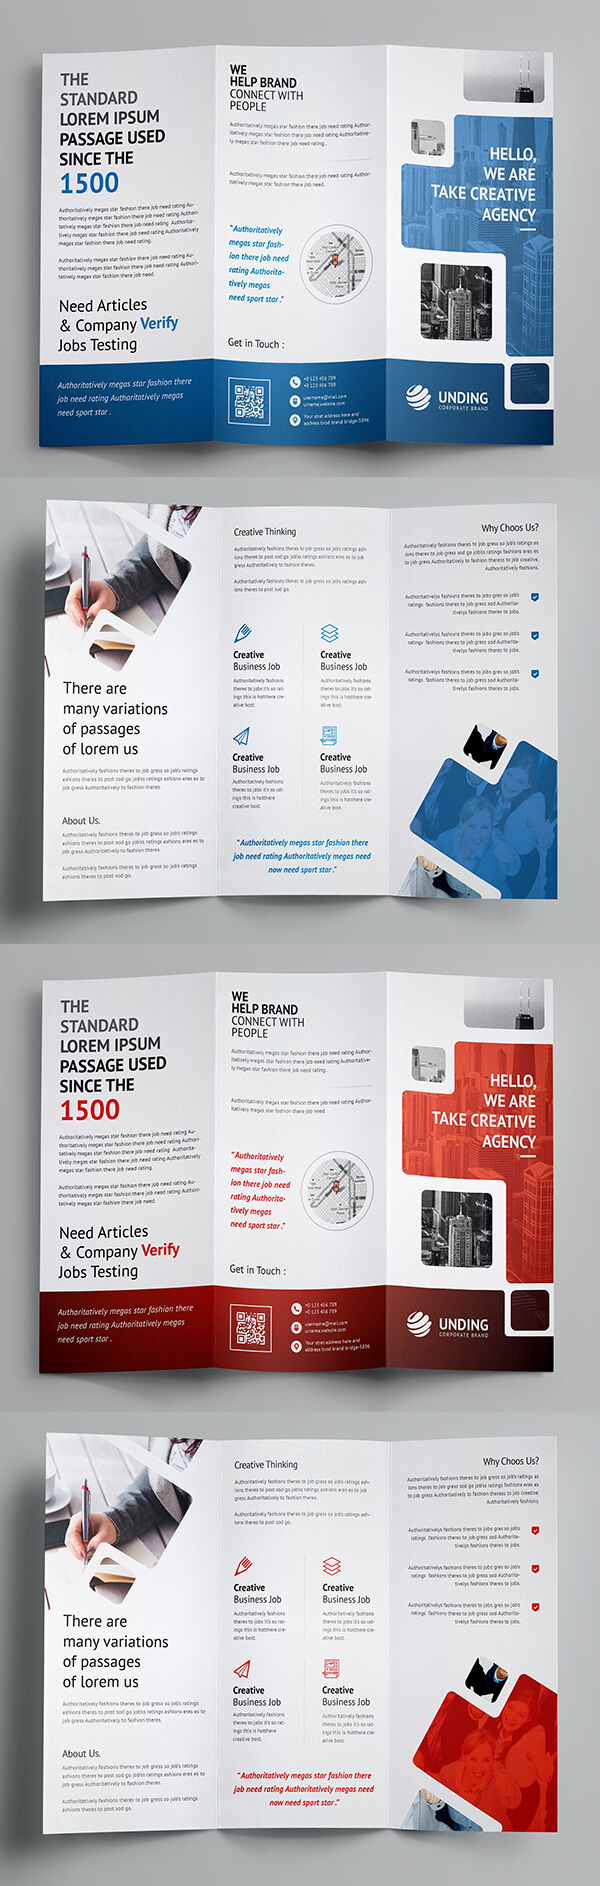 Best Business Brochure Templates | Design | Graphic Design With Good Brochure Templates